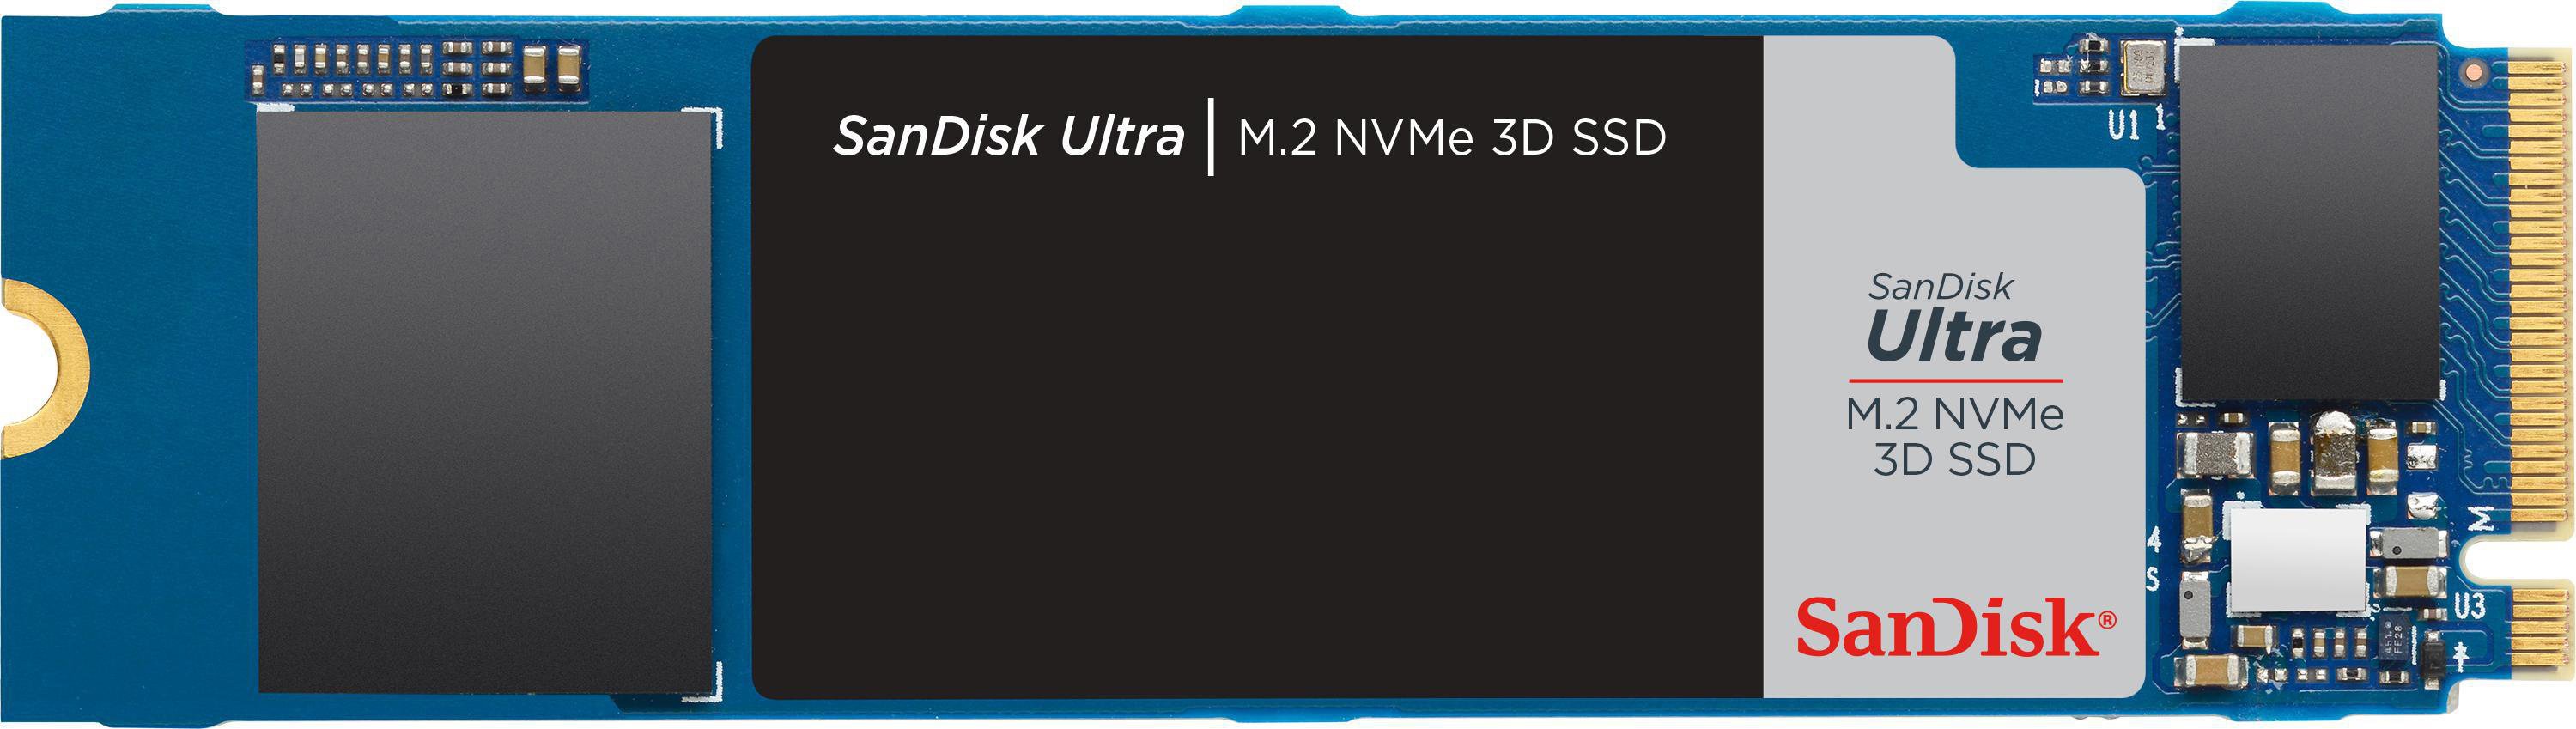 Sandisk Ultra 3D SSD (1 ترابایت)